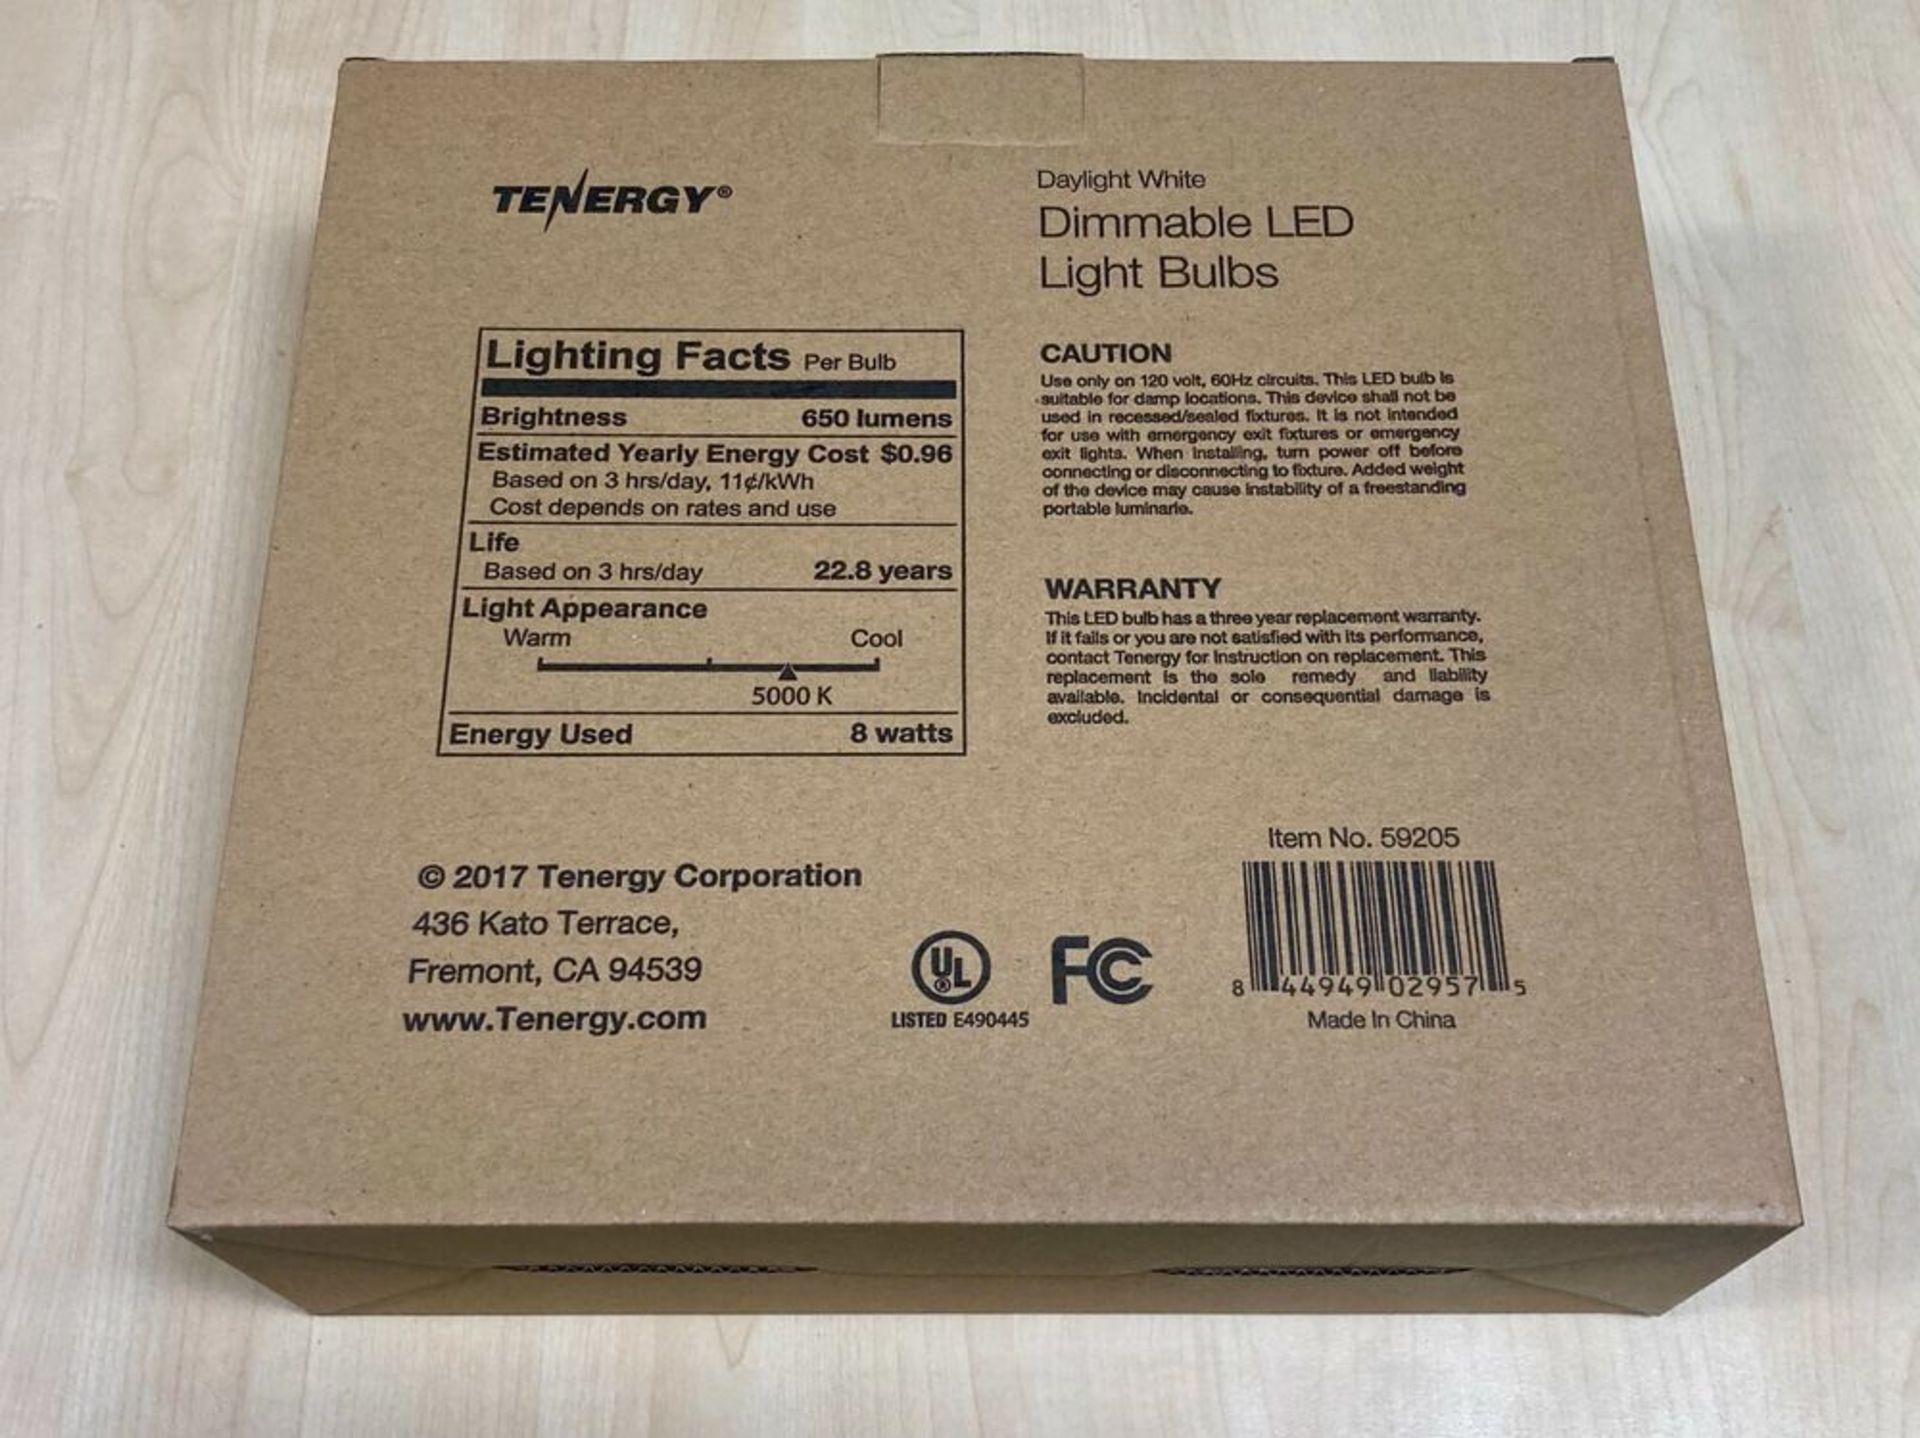 Tenergy 8 Pack Dimmable LED Light Bulbs - 8 Watts 5000K 650 Lumens - PN 59205 - Image 3 of 4